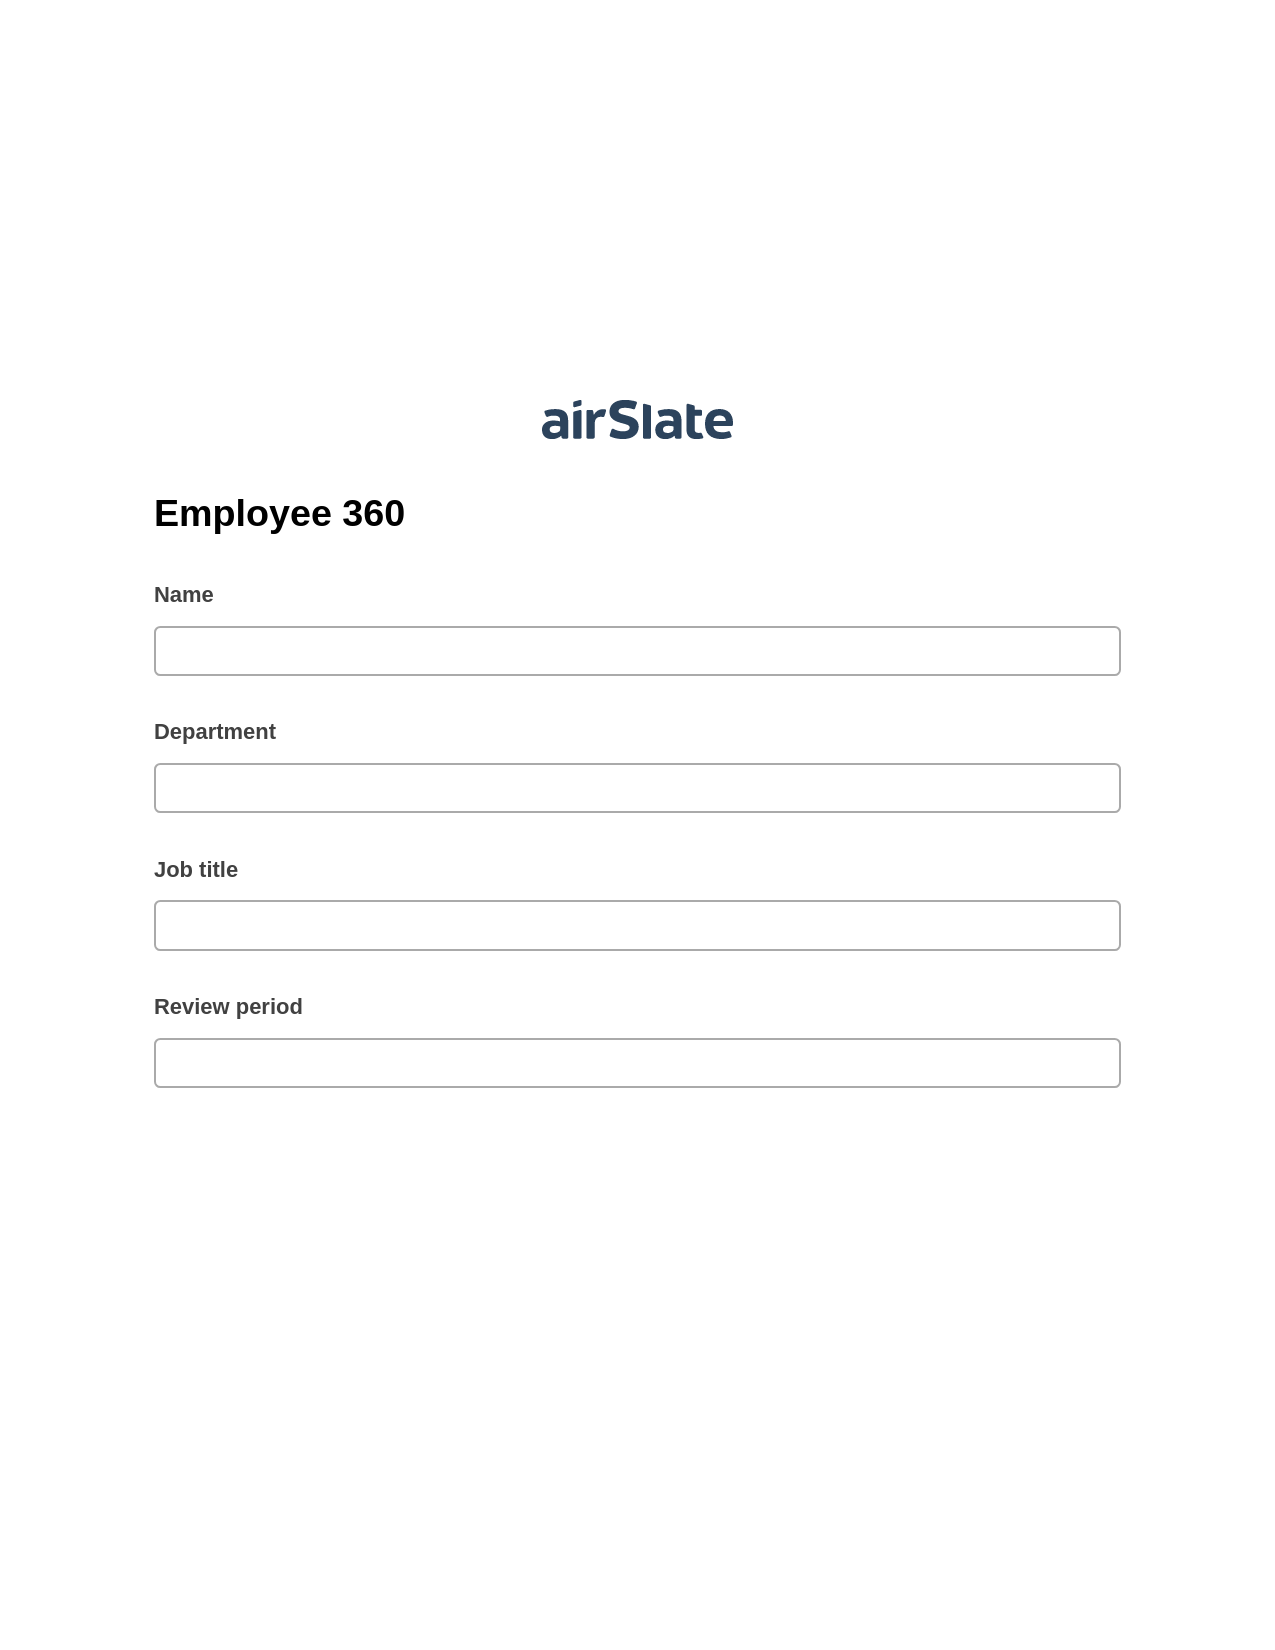 Employee 360 Pre-fill from MS Dynamics 365 Records, Invoke Salesforce Process Bot, Post-finish Document Bot